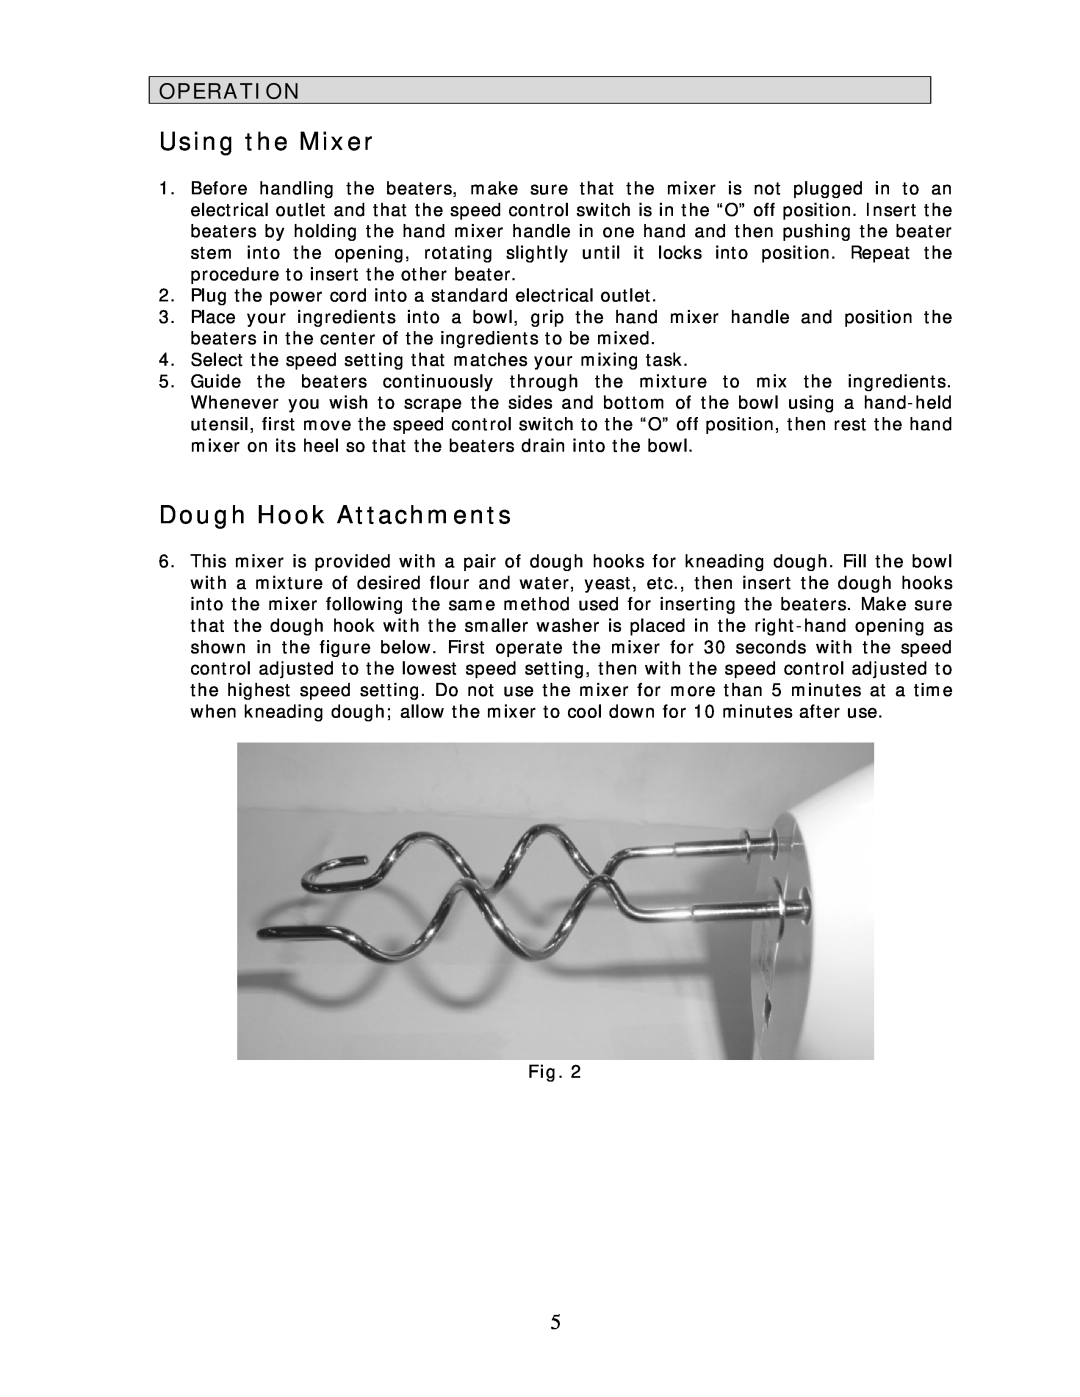 Wachsmuth & Krogmann TSK-941 SSN manual Using the Mixer, Dough Hook Attachments, Operation 